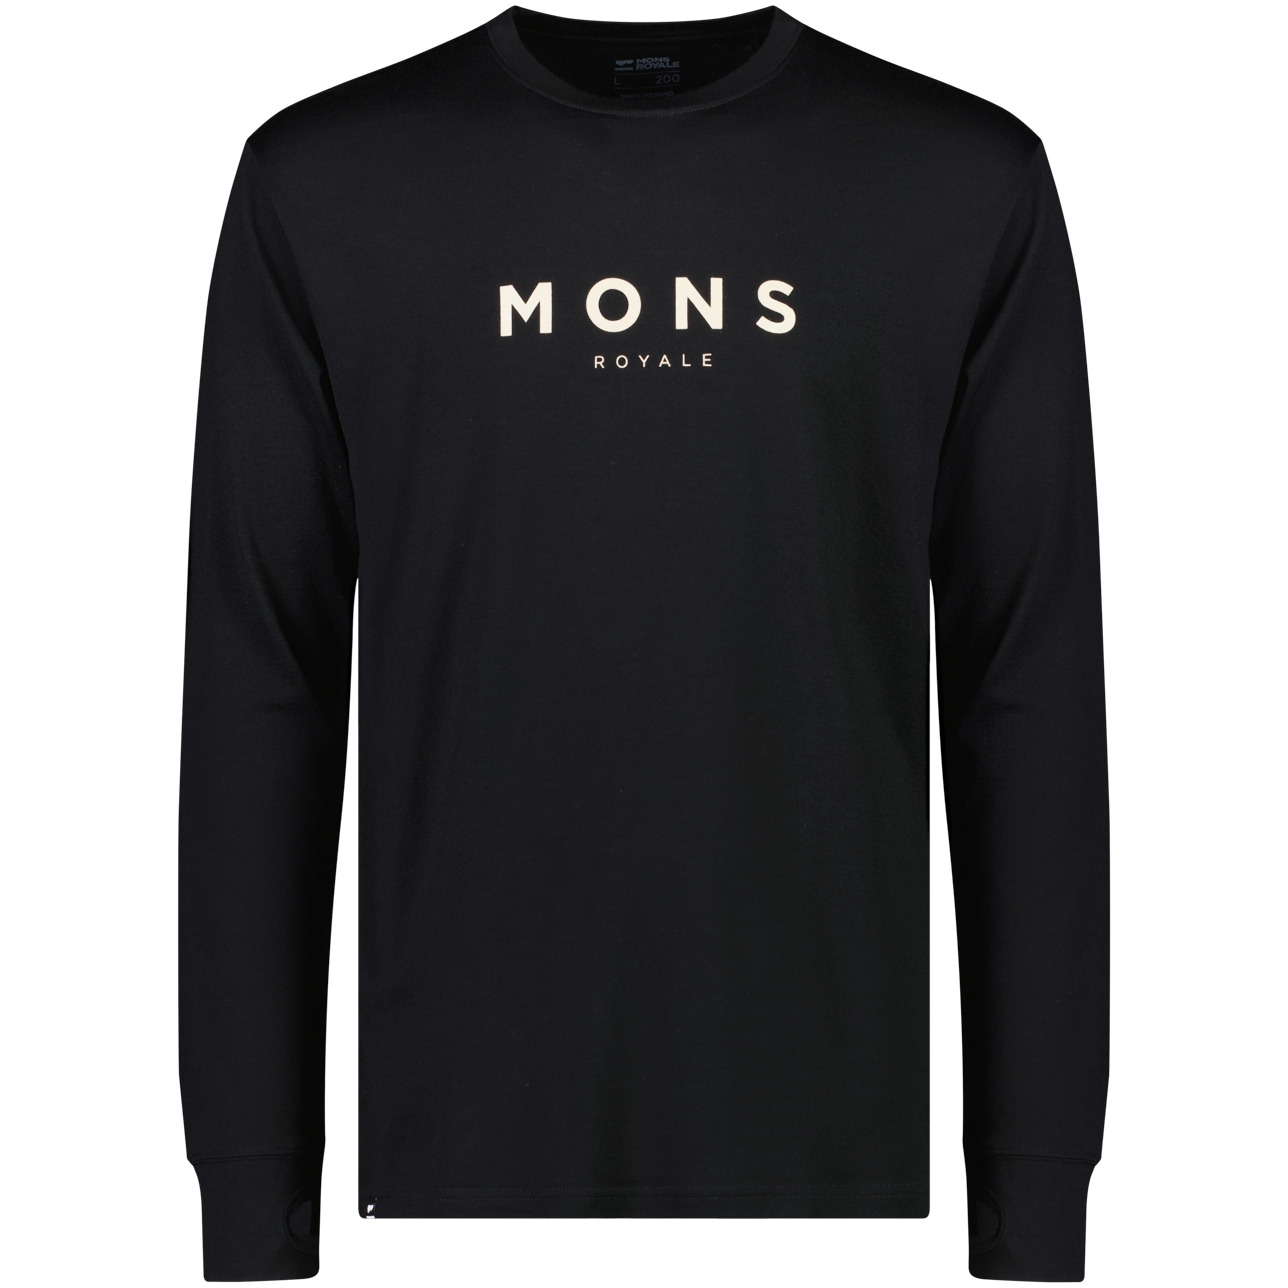 Productfoto van Mons Royale Yotei Classic Shirt met Lange Mouwen - zwart